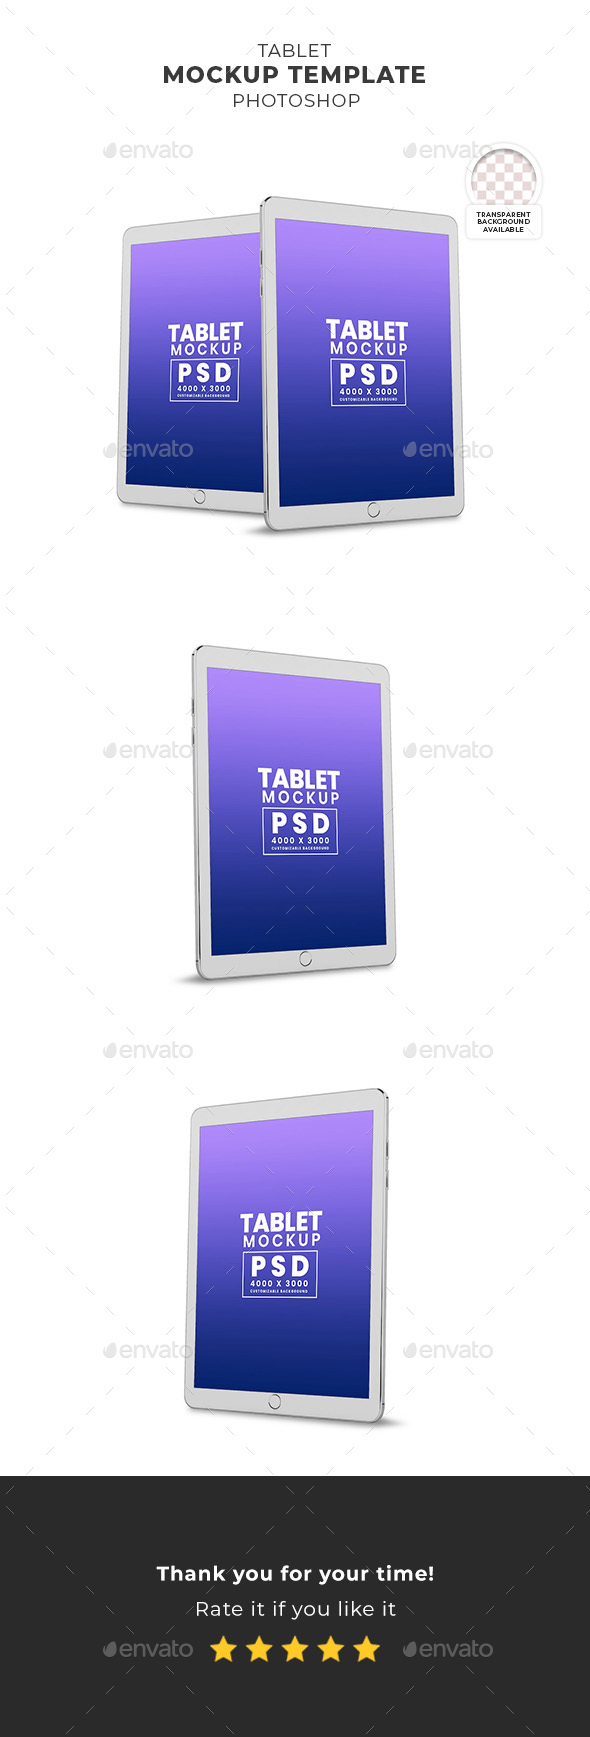 [DOWNLOAD]iPad Tablet Mockup Template